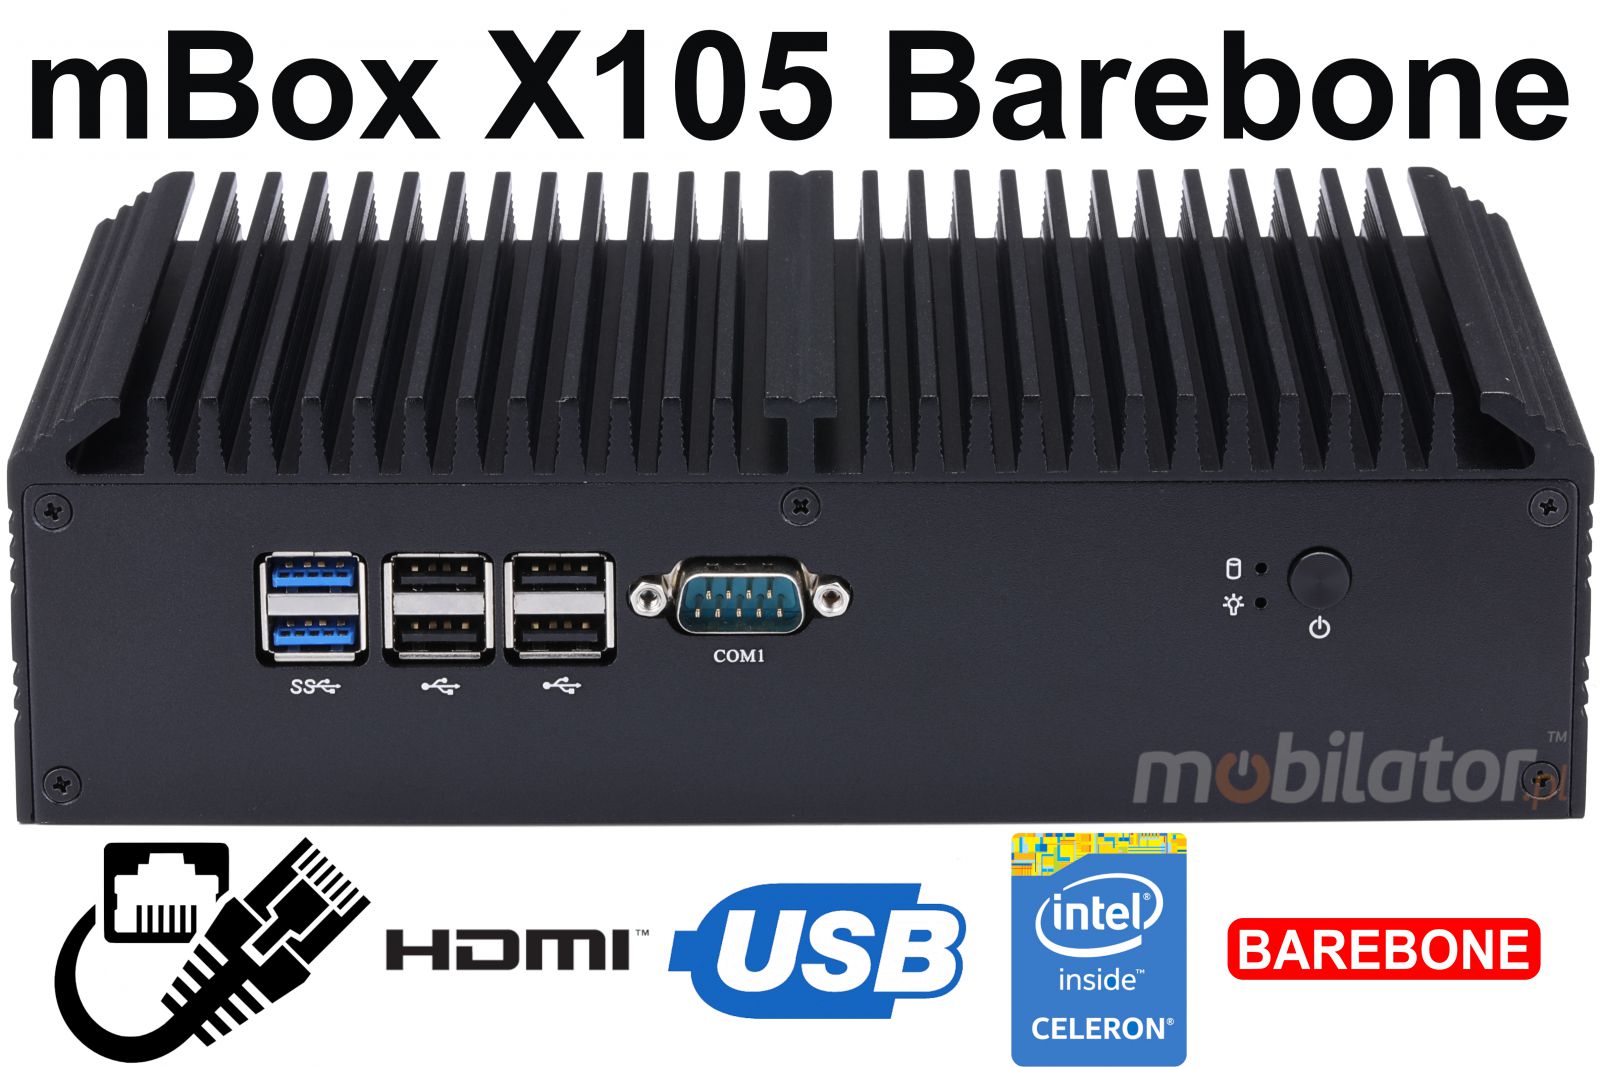 mBox X105 Barebone - Industrial Mini Computer with Intel Celeron 3855U Processor - Title image